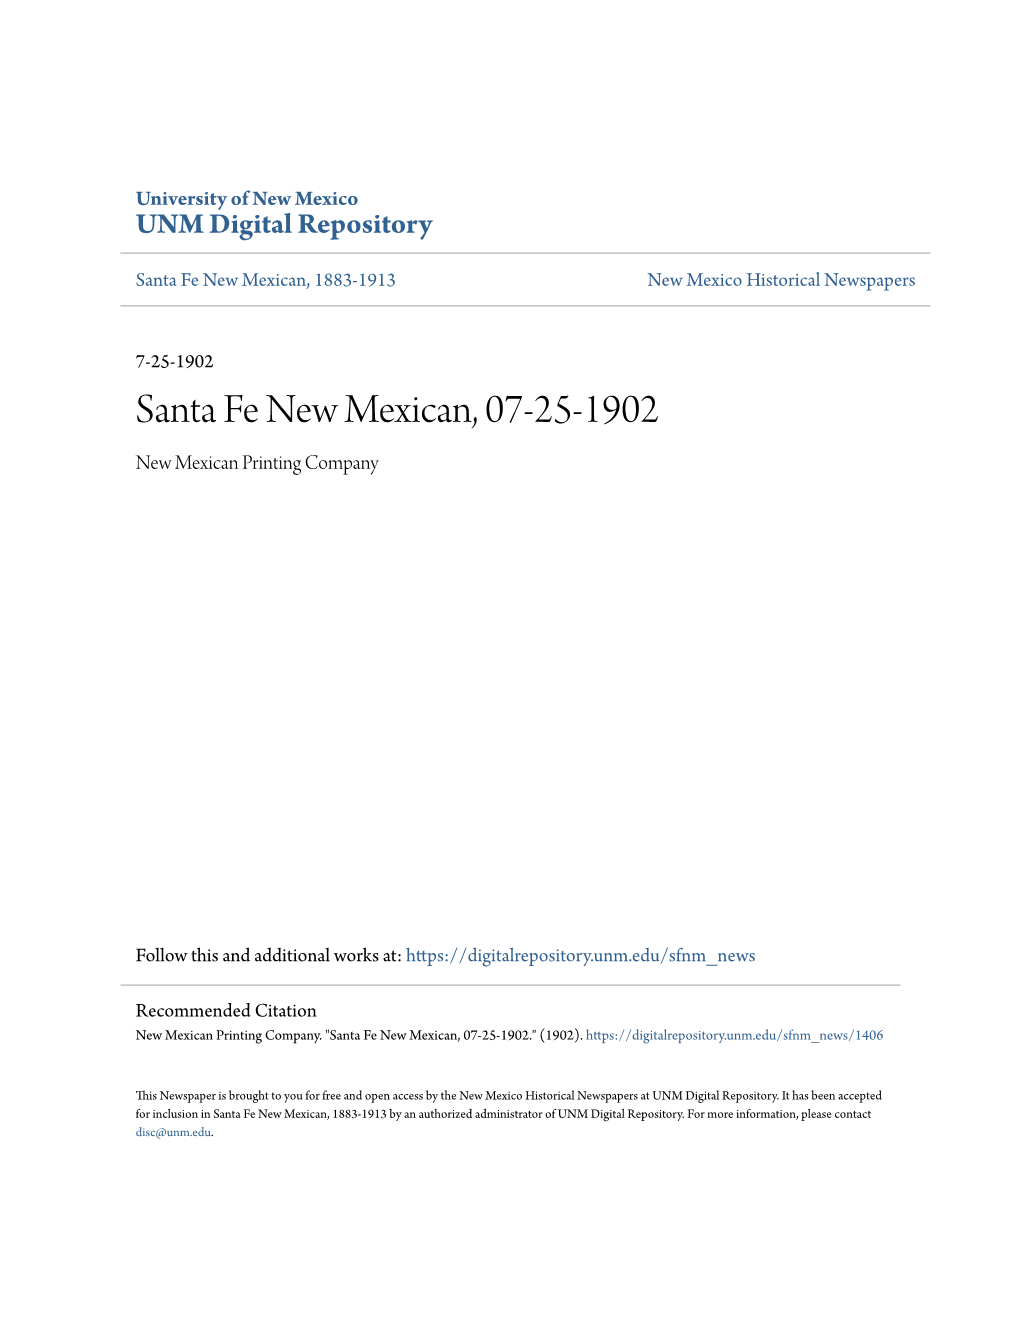 Santa Fe New Mexican, 07-25-1902 New Mexican Printing Company